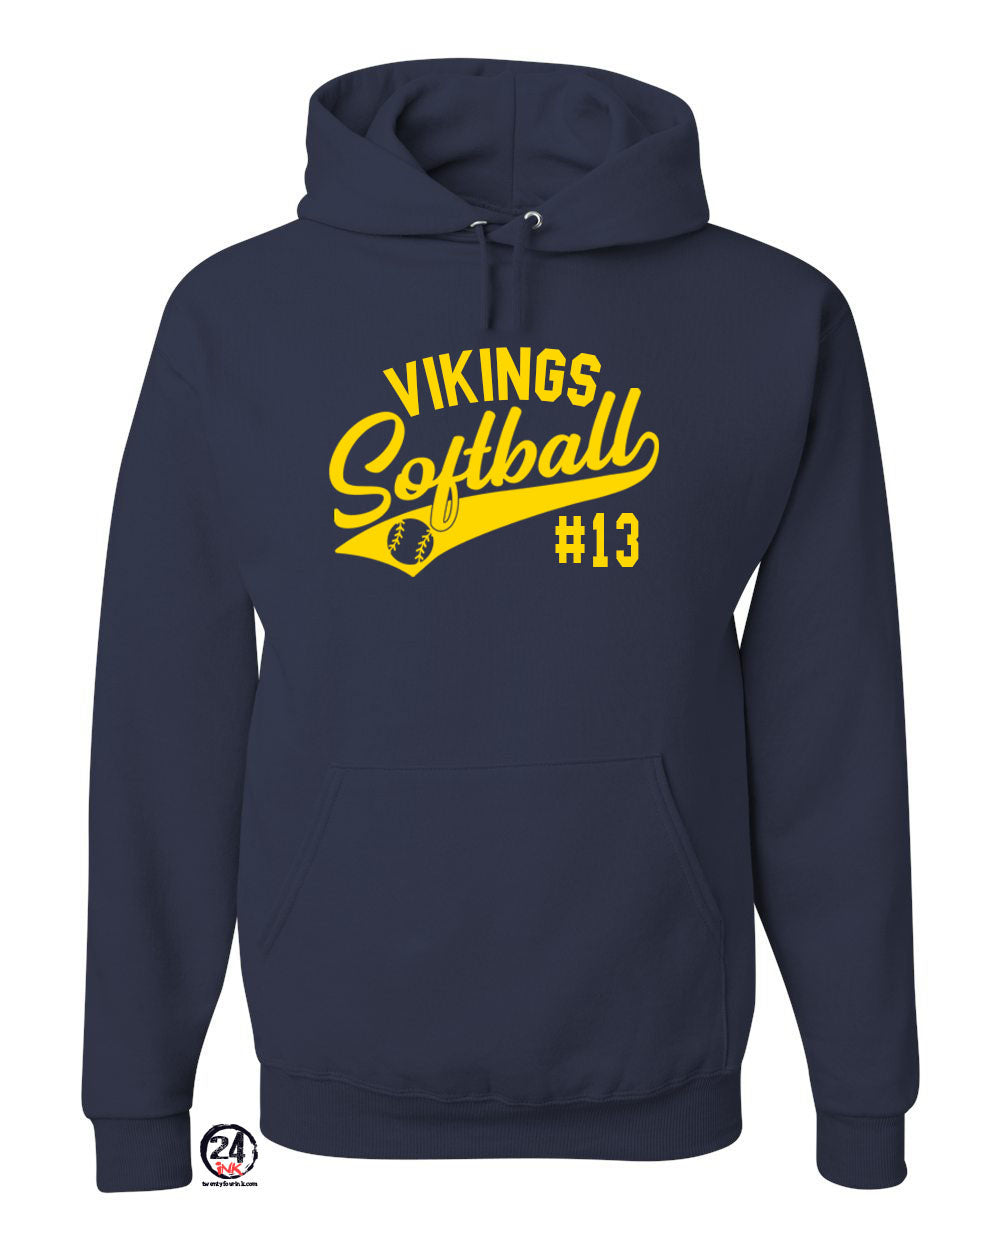 Vikings Softball Hooded Sweatshirt